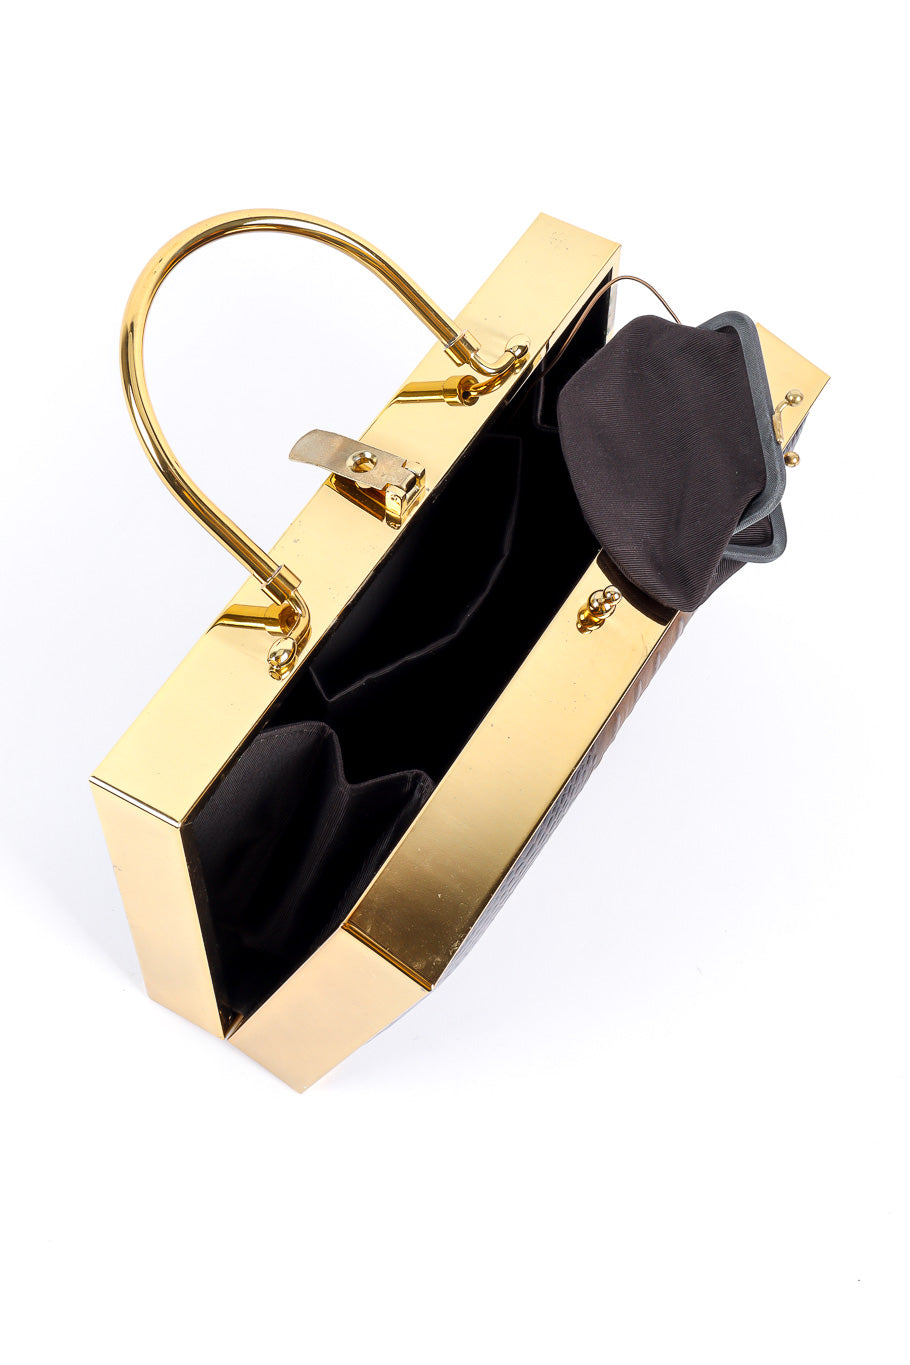 Lou Taylor gold frame box purse attached coin purse @recessla